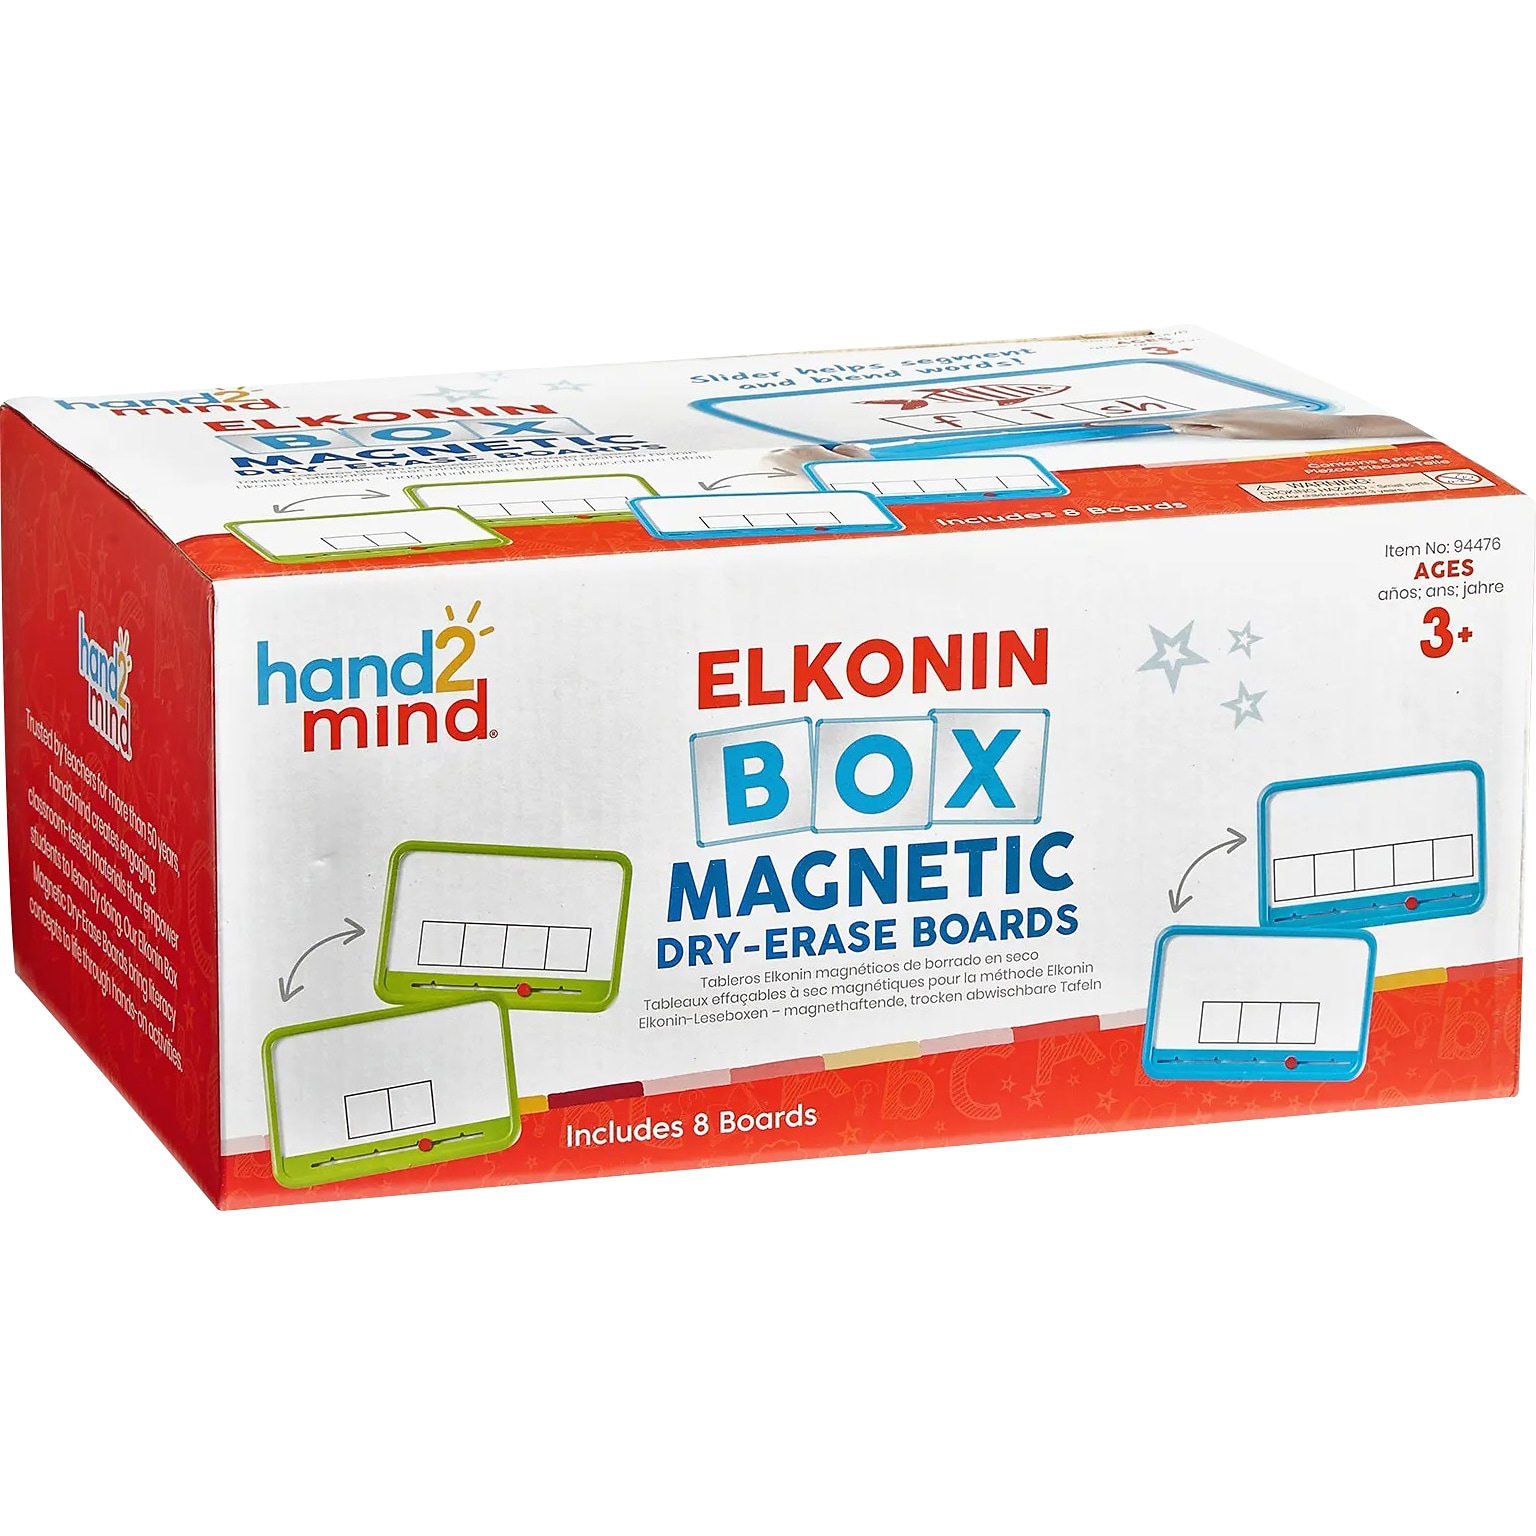 hand2mind Elkonin Box Dry-Erase Board Set (94476)